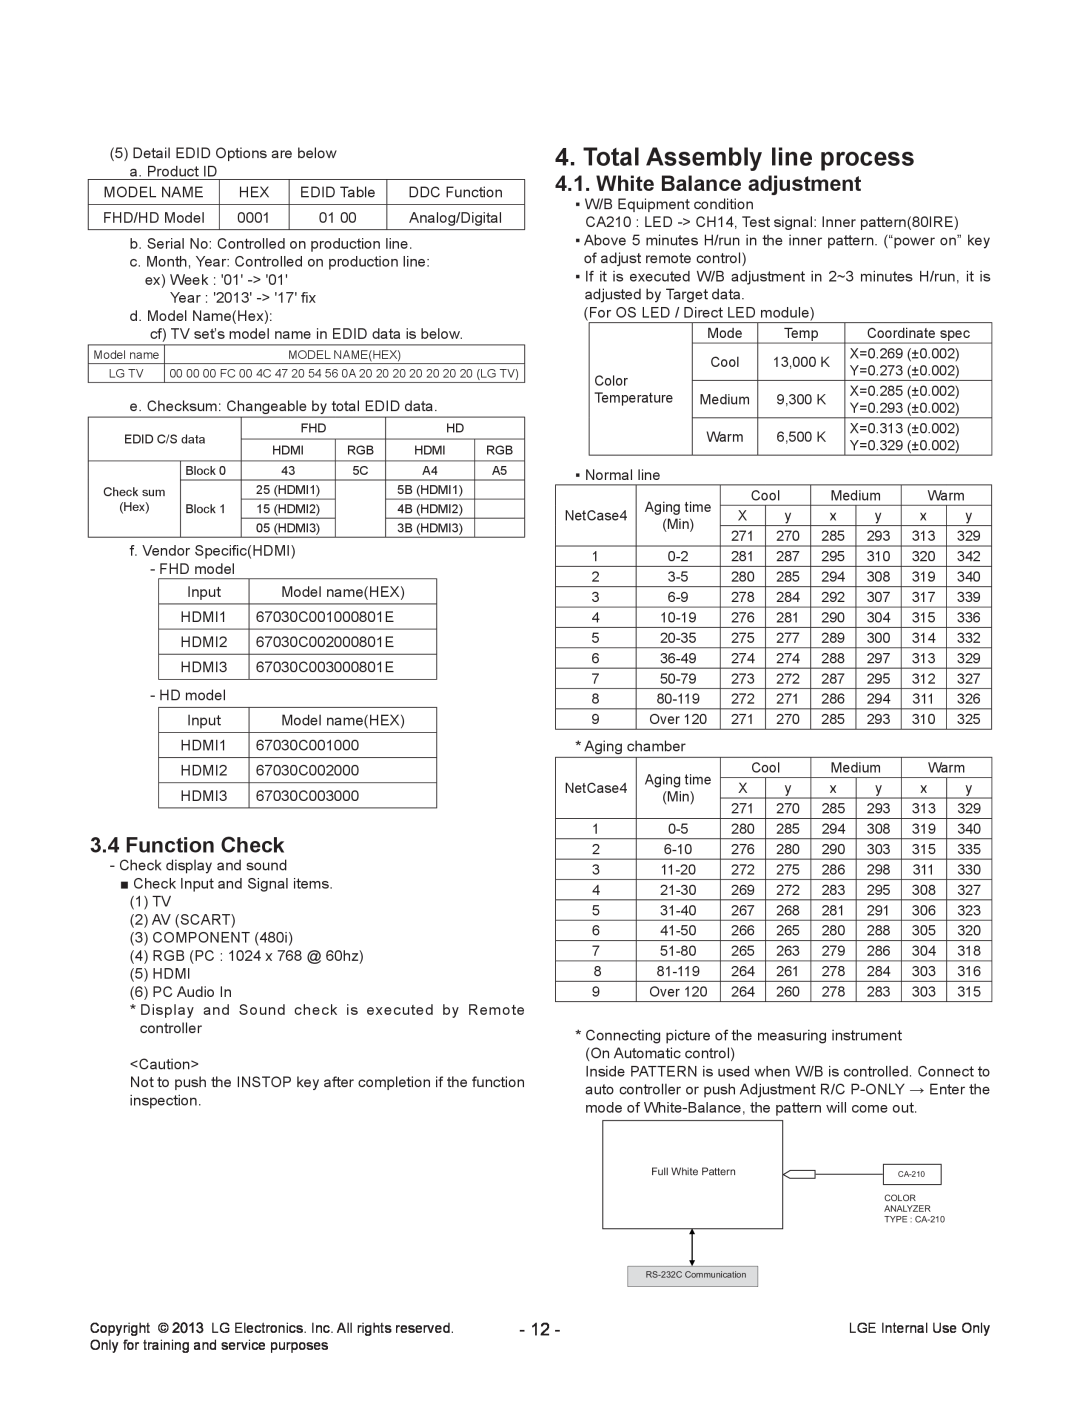 LG Electronics 361H-ZA, 42LN548C/549C, 42LP360H Total Assembly line process, Function Check, White Balance adjustment 